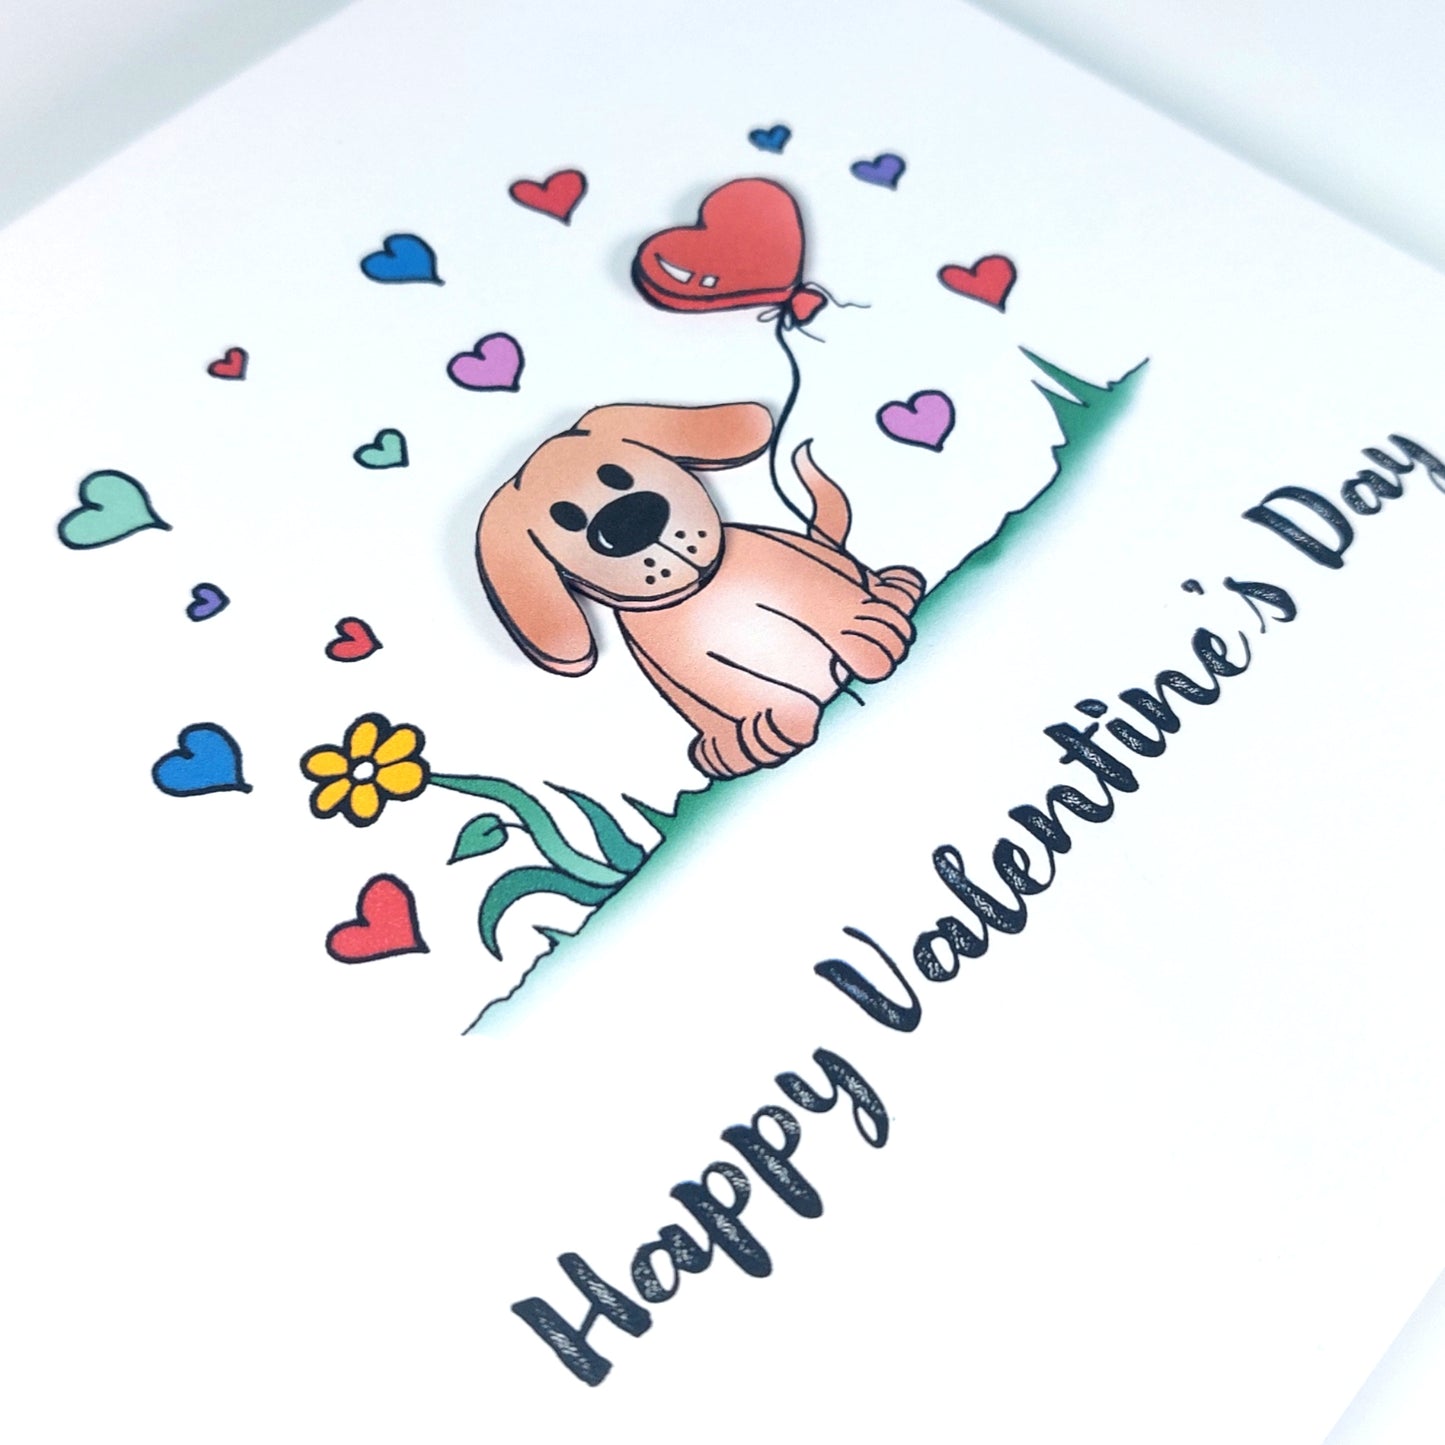 Dog Happy Valentines Day Card